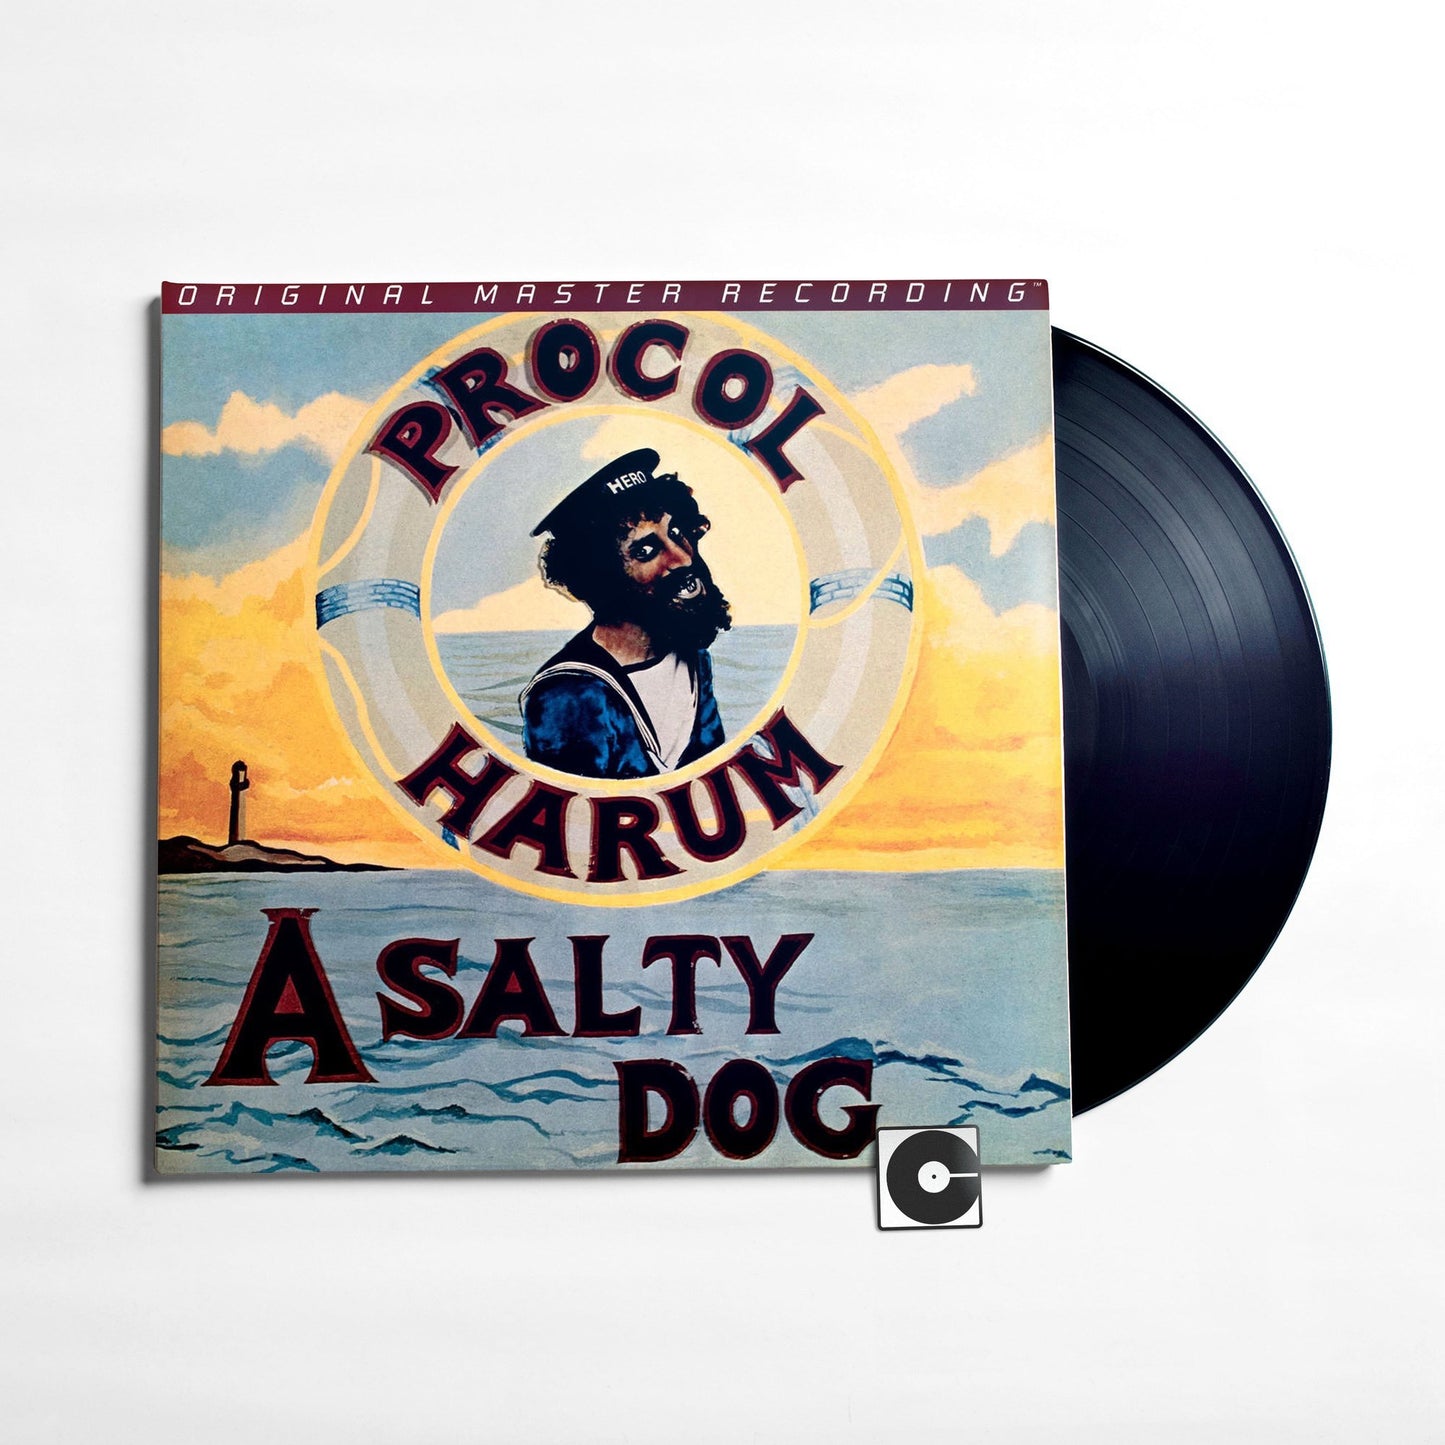 Procol Harum - "A Salty Dog" MoFi